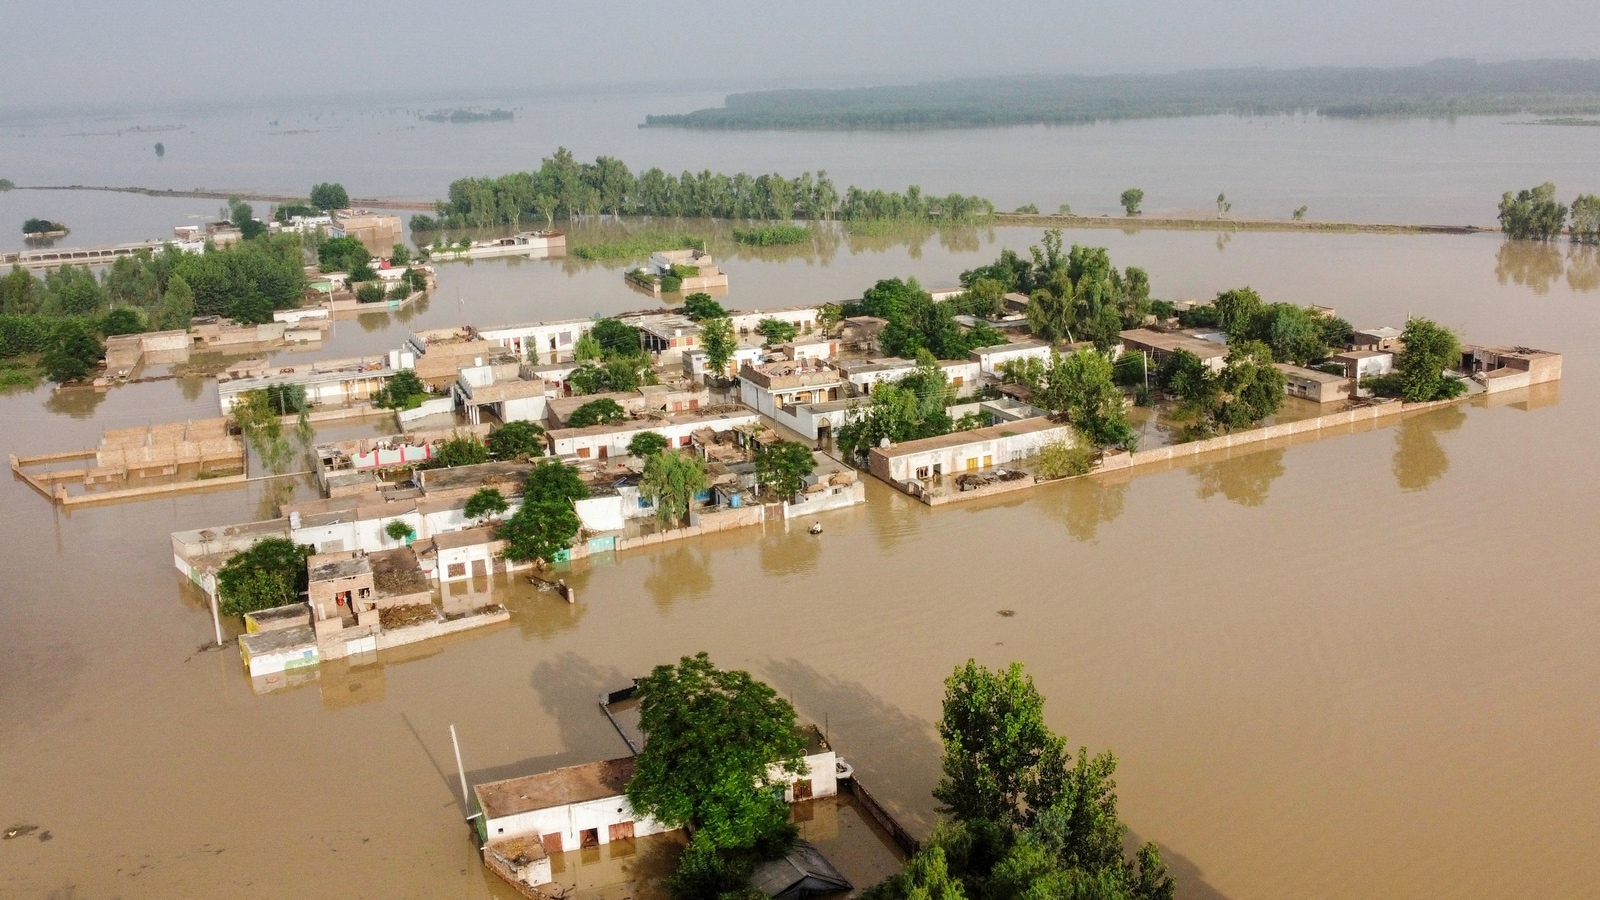 33-million-affected-982-dead-6-8-lakh-houses-destroyed-amid-pak-floods-report